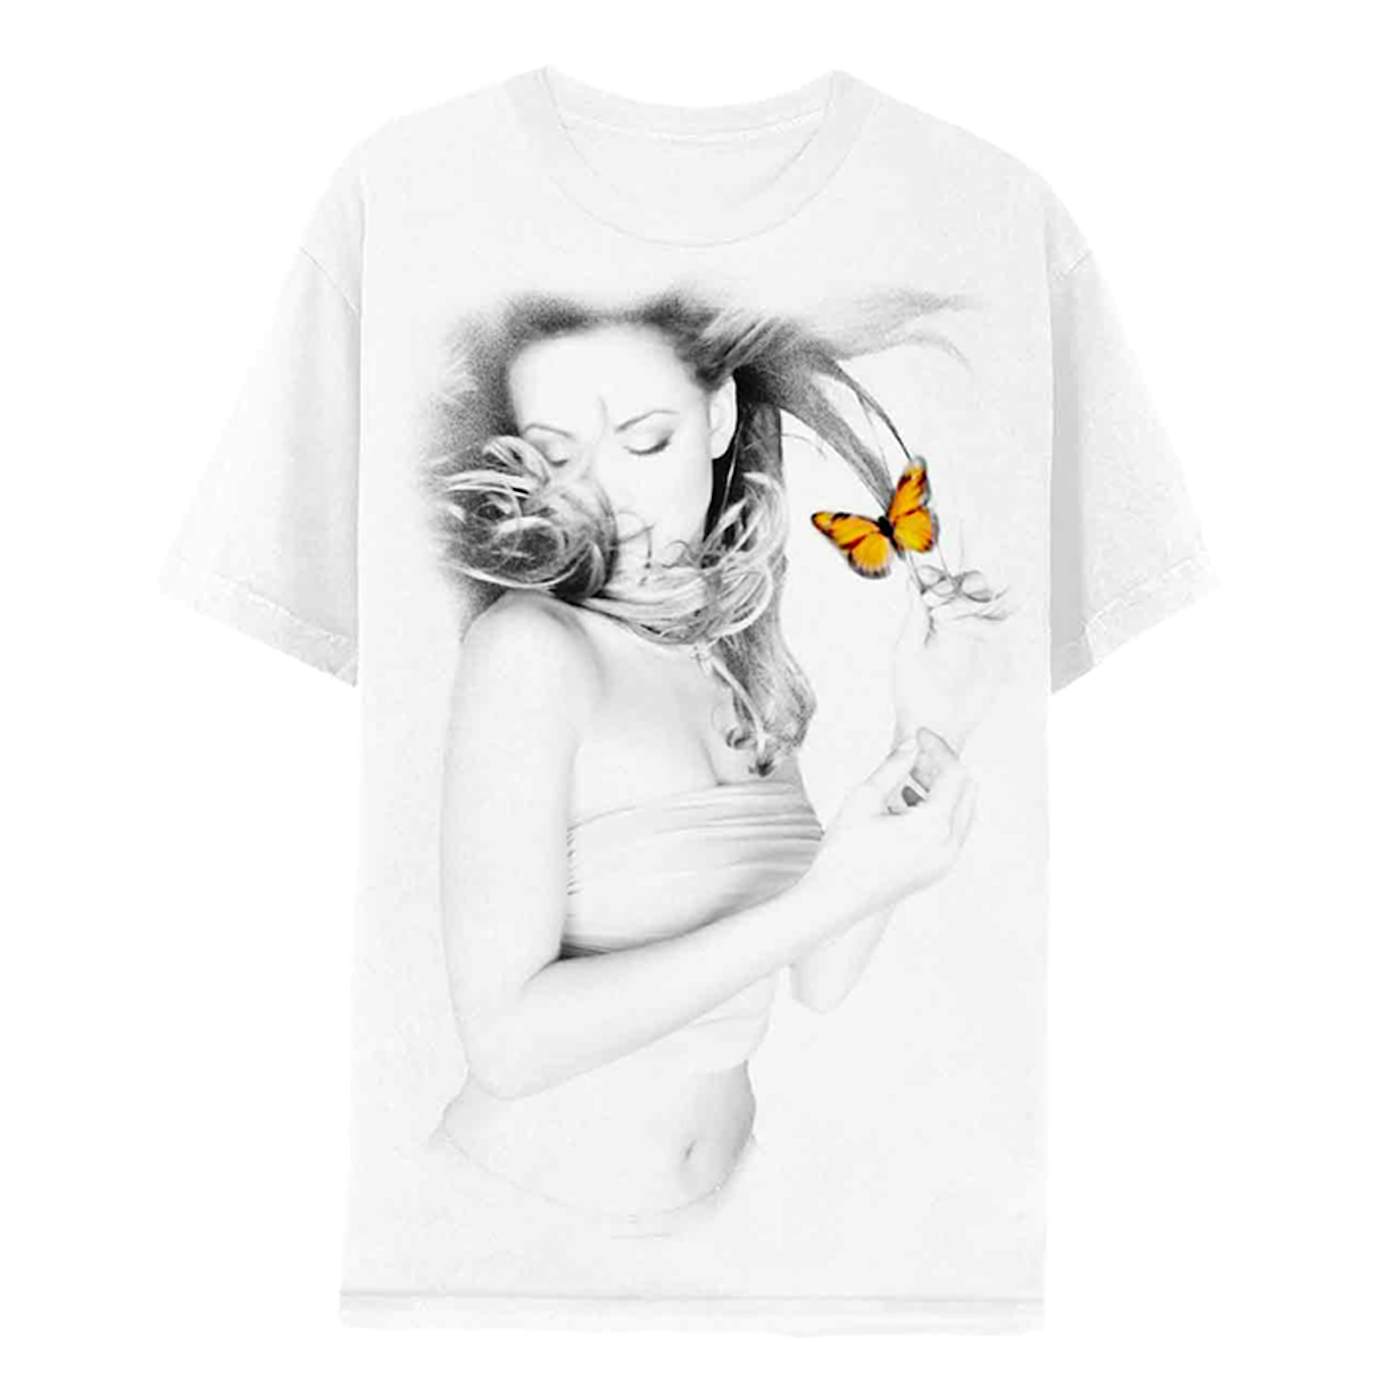 Mariah Carey #Butterfly25 Fly Away Tee